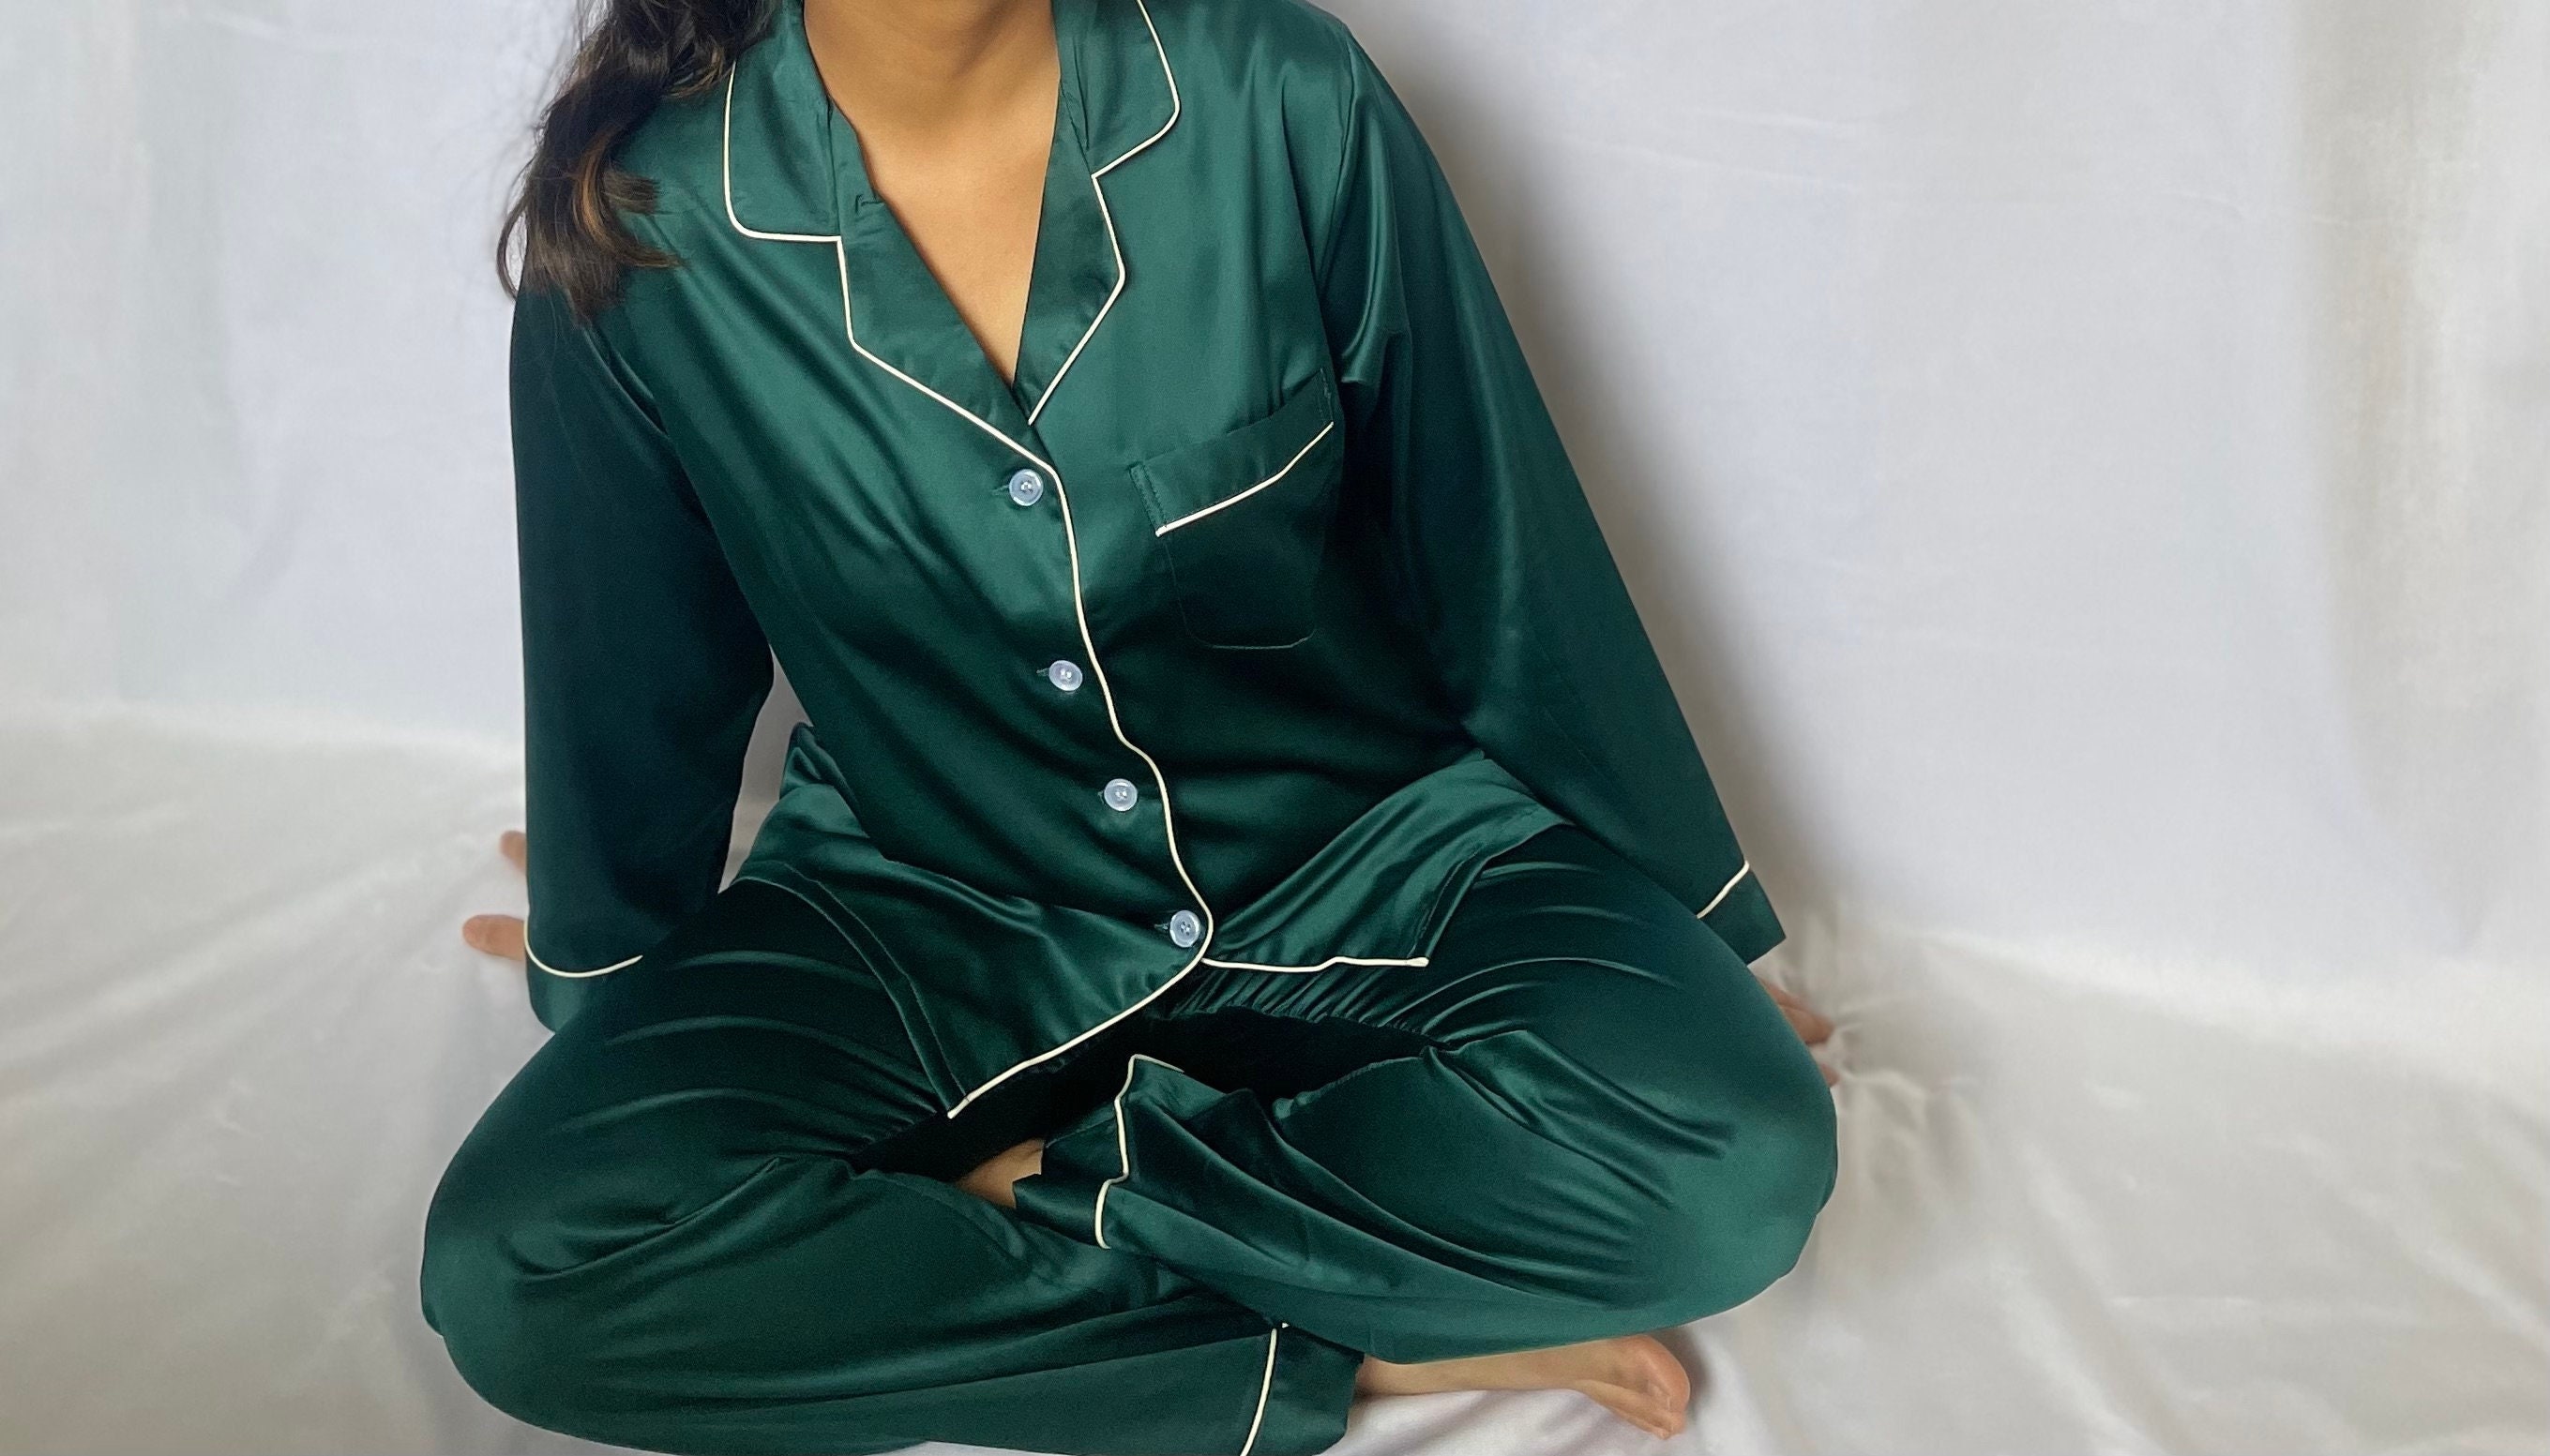 Velvet Pajamas Set Women Sleepwear Green Velour Pijamas Suit 2 PCS  Shirt&Pant Casual Soft Bathrobe Nightwear Autumn Homewear